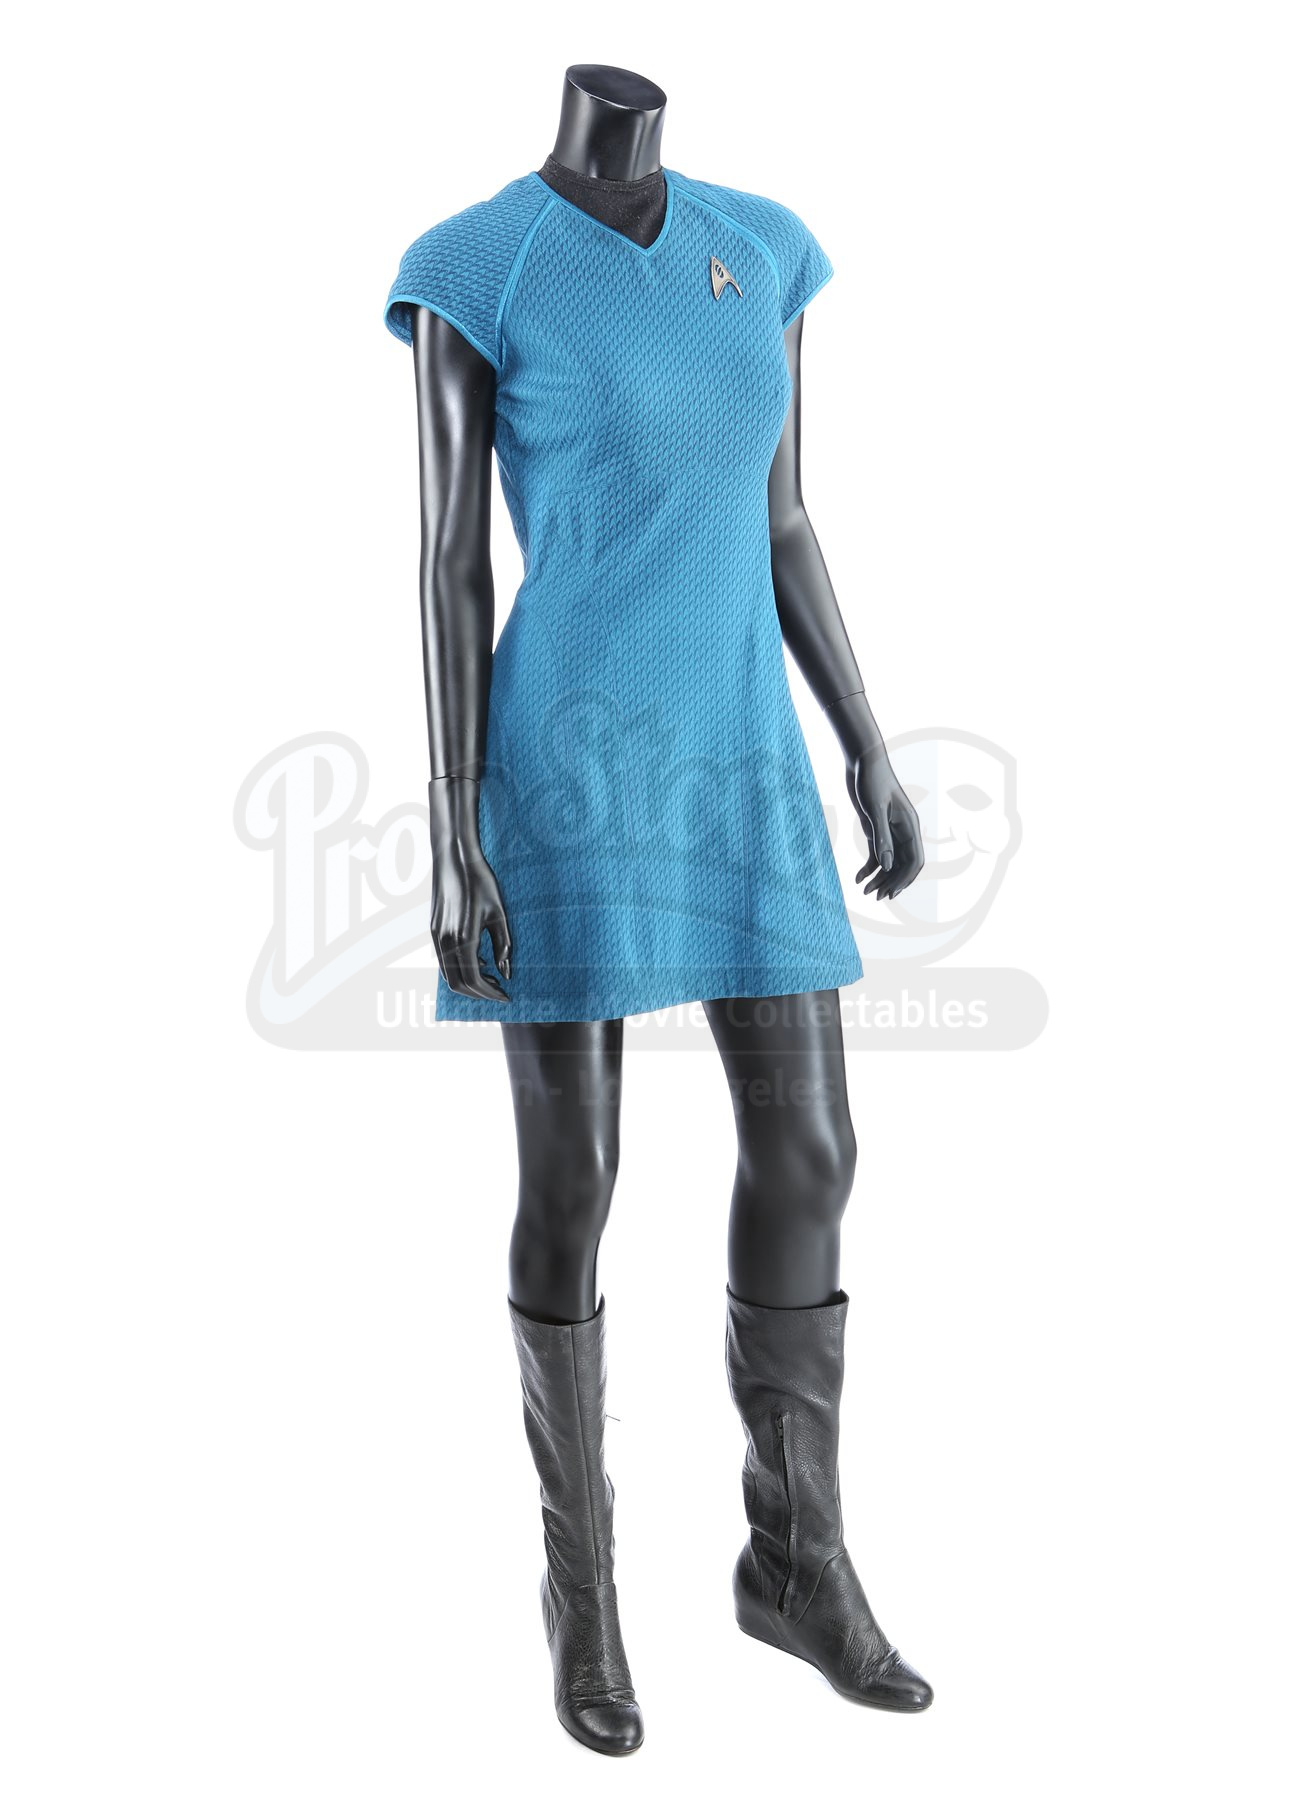 Doctor Carol Marcus Cosplay Costume Uniform Outfit Blue Star Trek Beyond 2016 